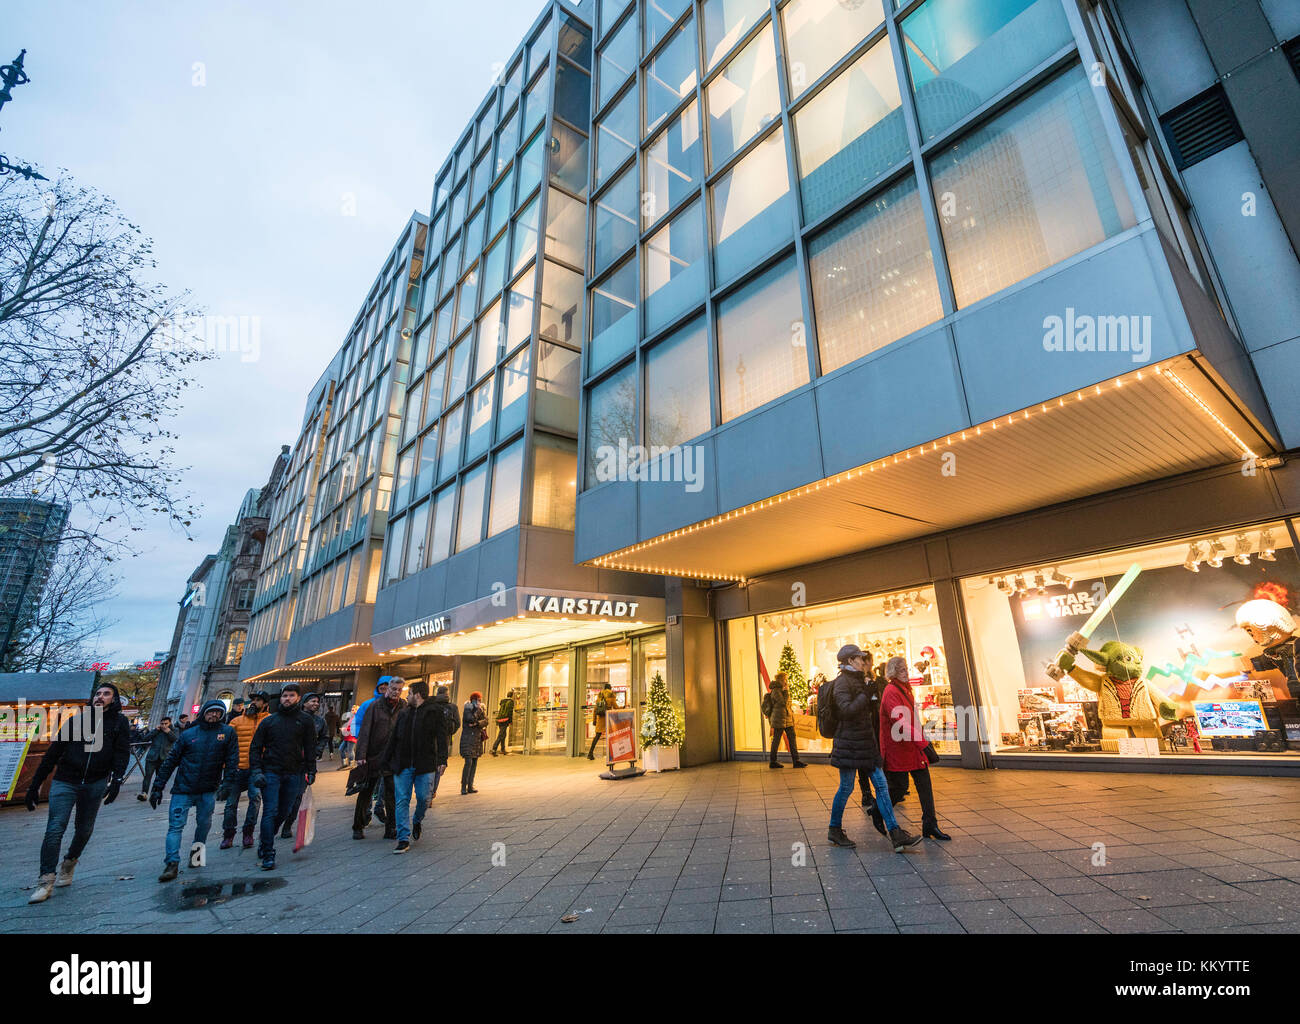 Grande magazzino Karstadt sulla famosa via commerciale Kurfurstendamm a Berlino, Germania. Foto Stock